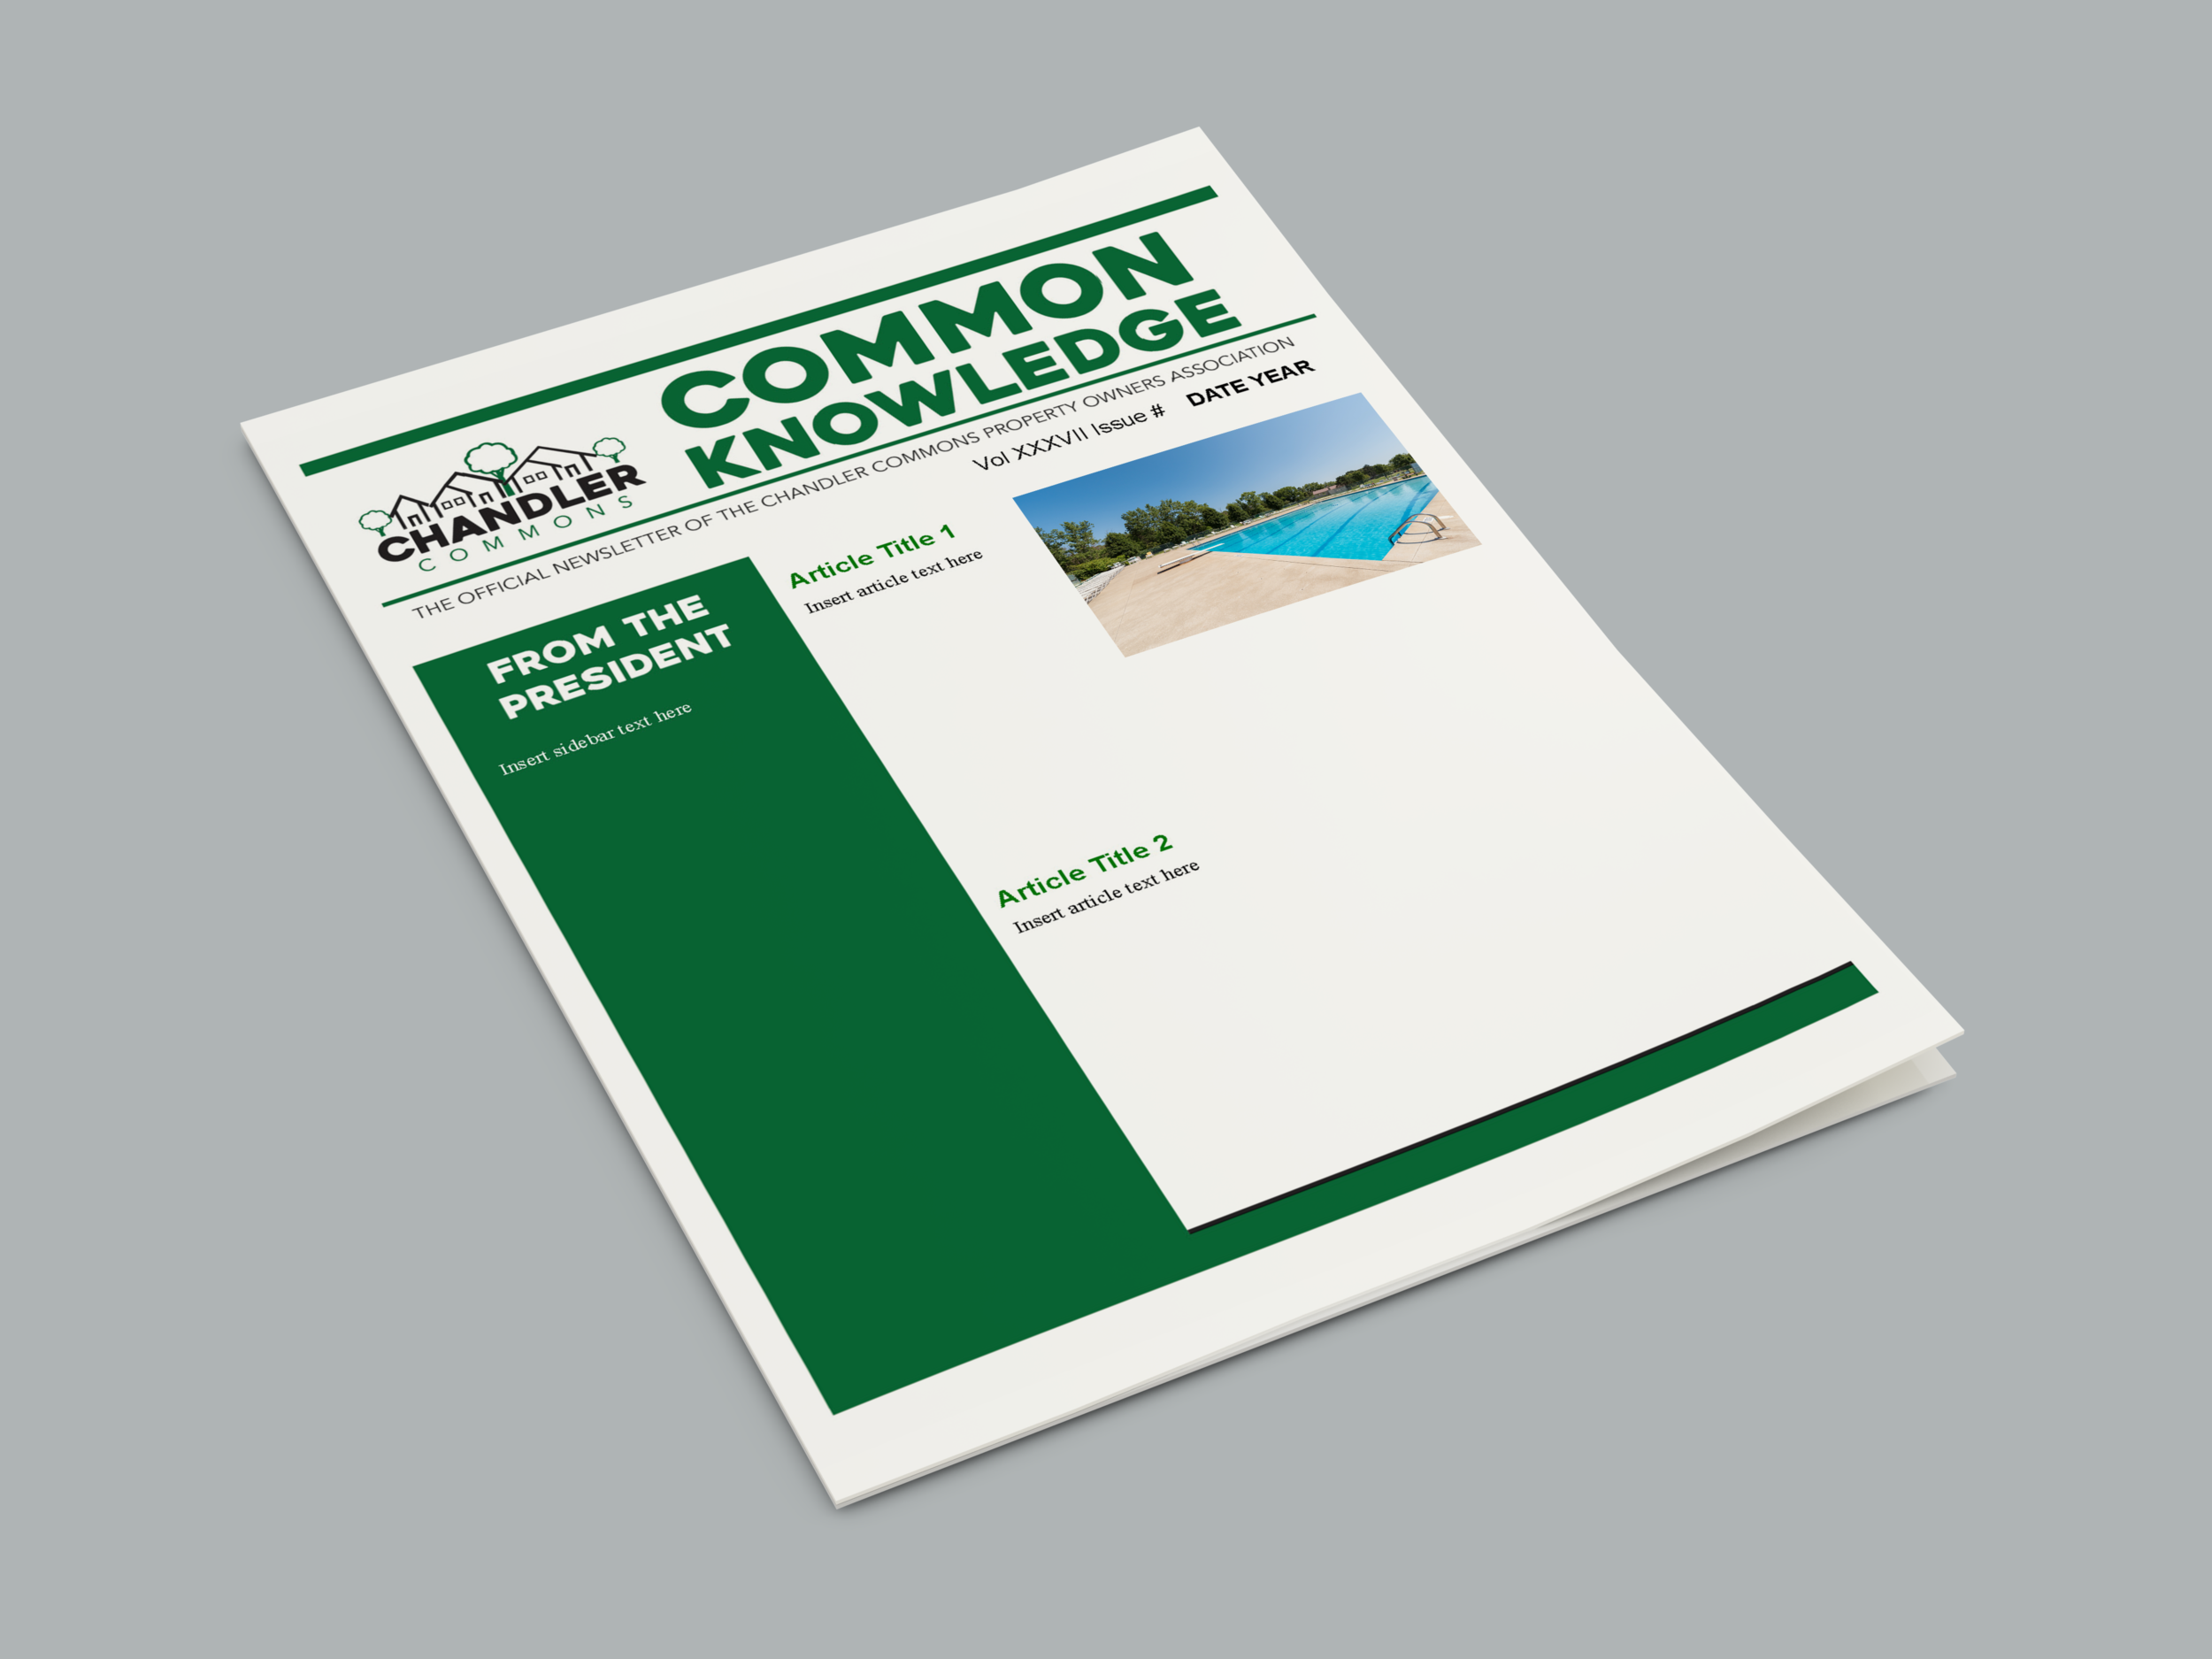 Chandler+Commons+Newsletter+Mockup.png